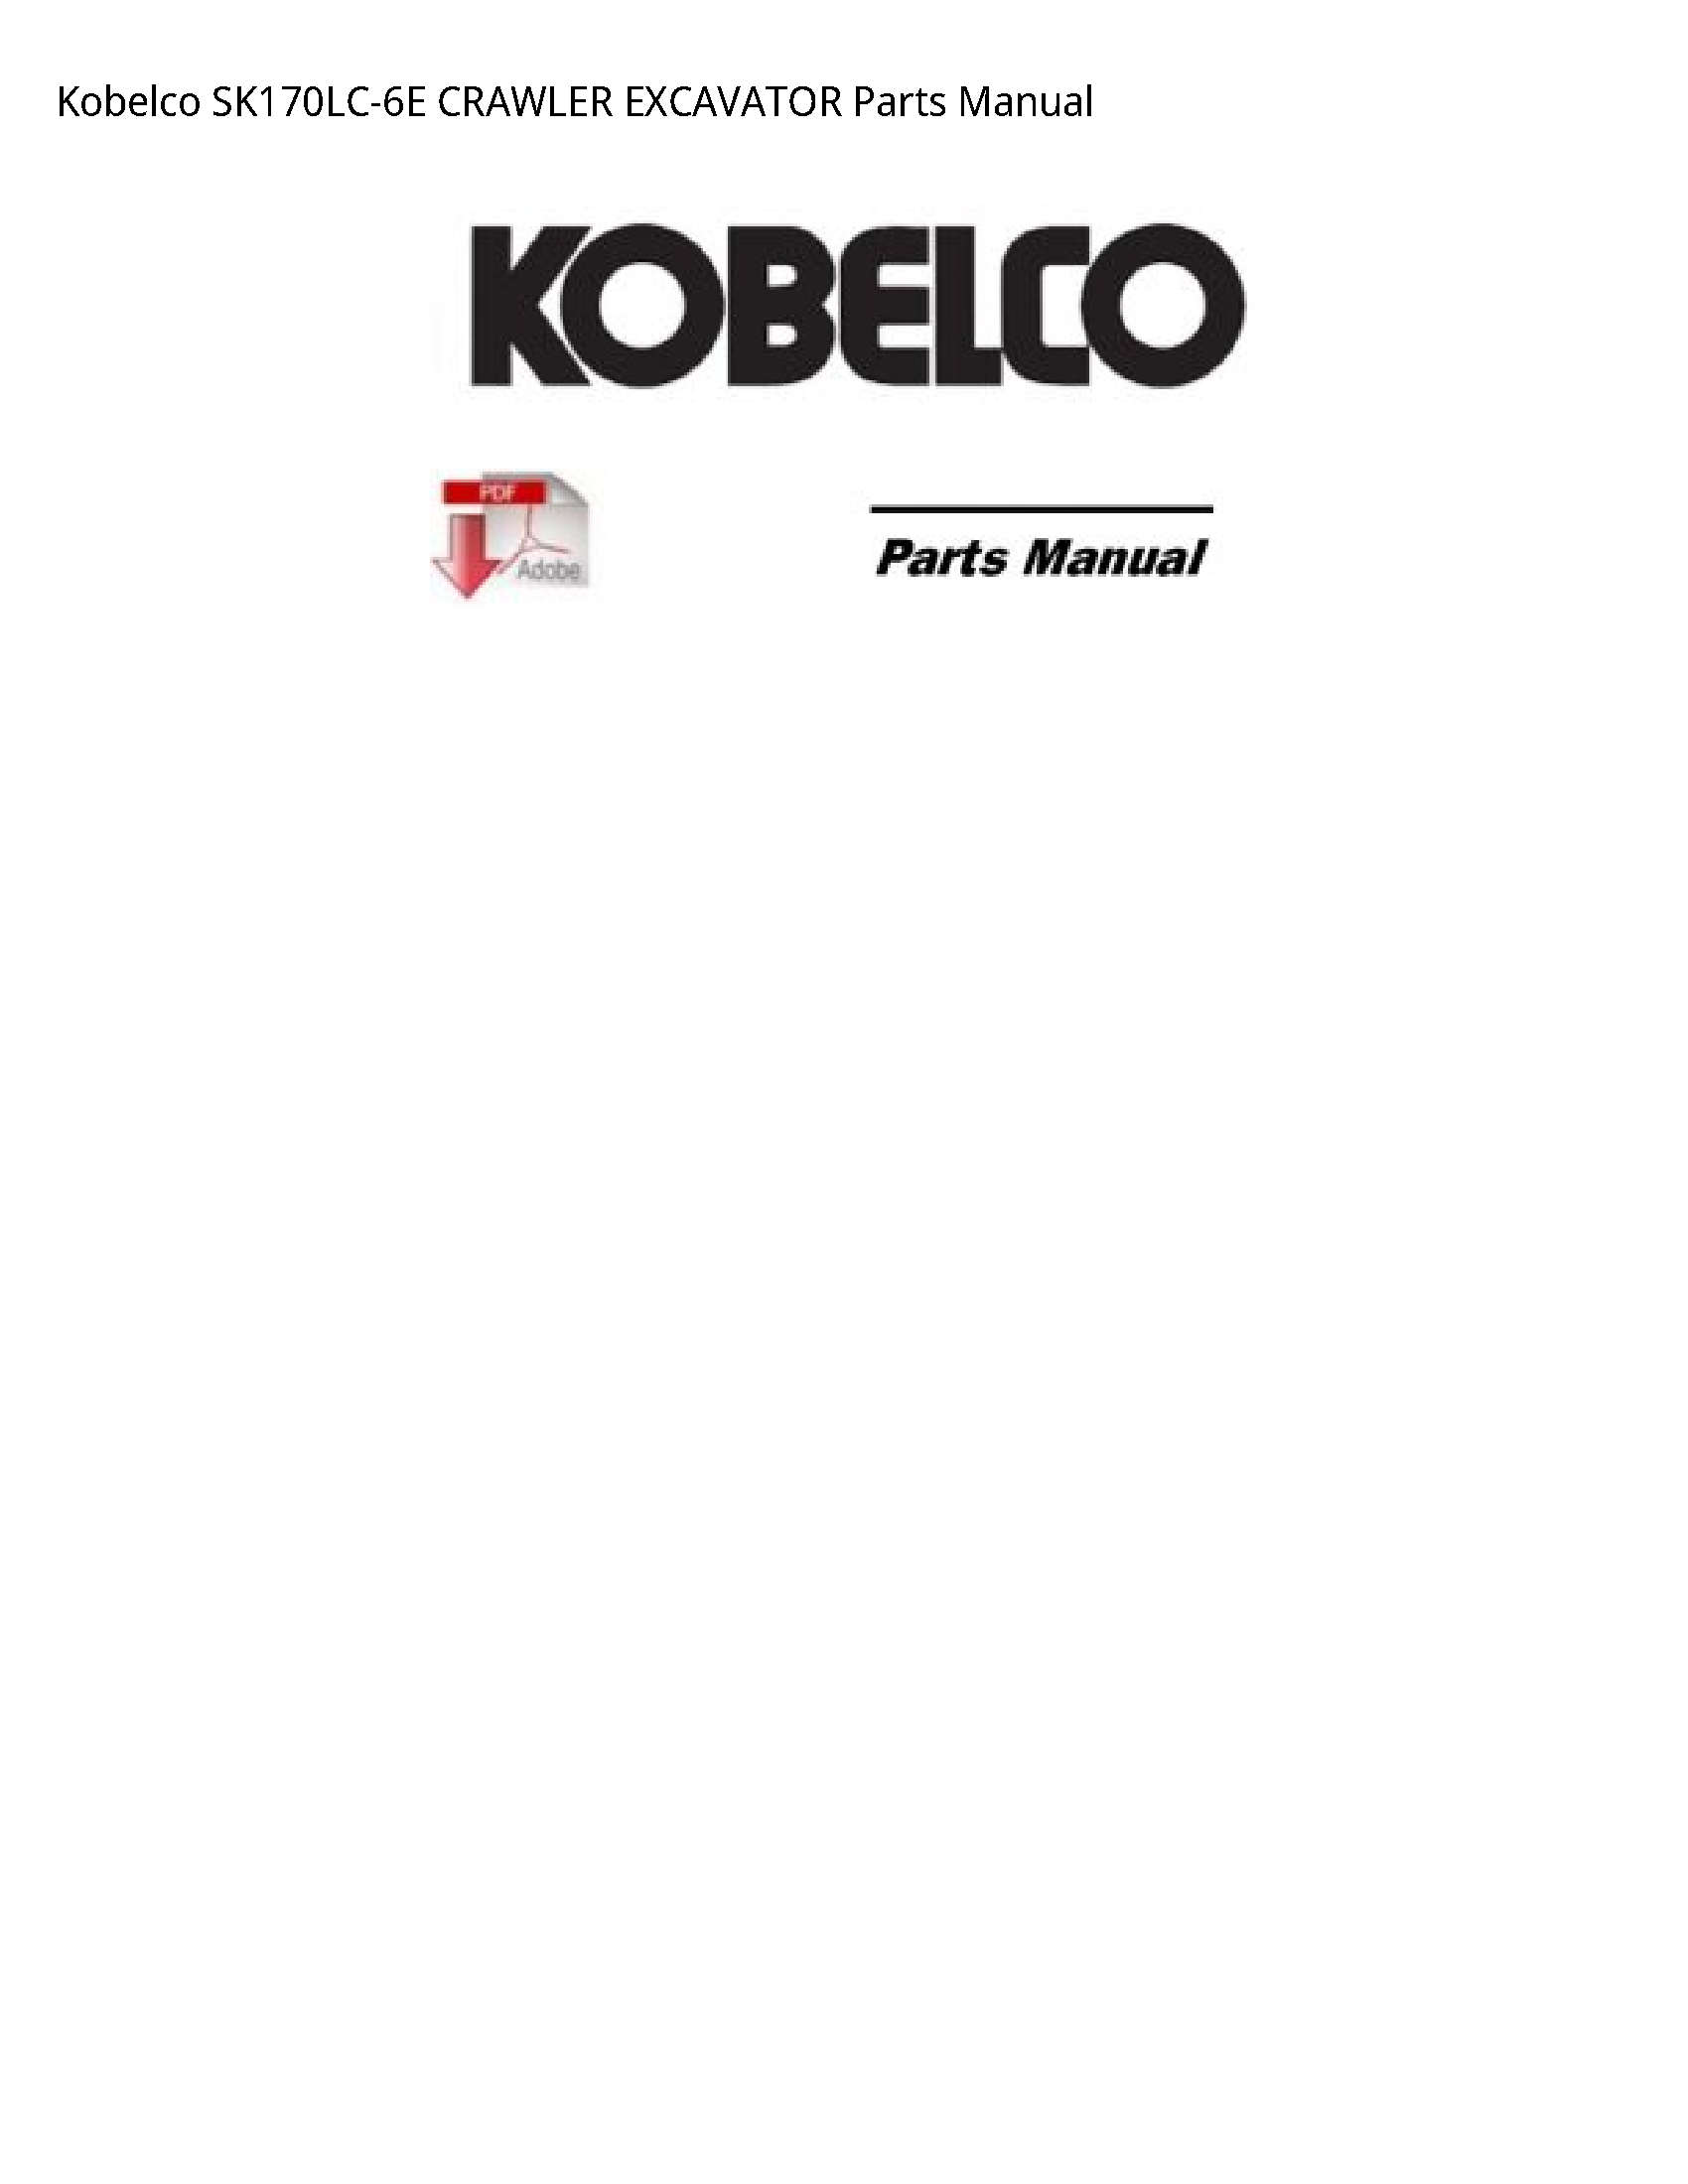 Kobelco SK170LC-6E CRAWLER EXCAVATOR Parts Manual